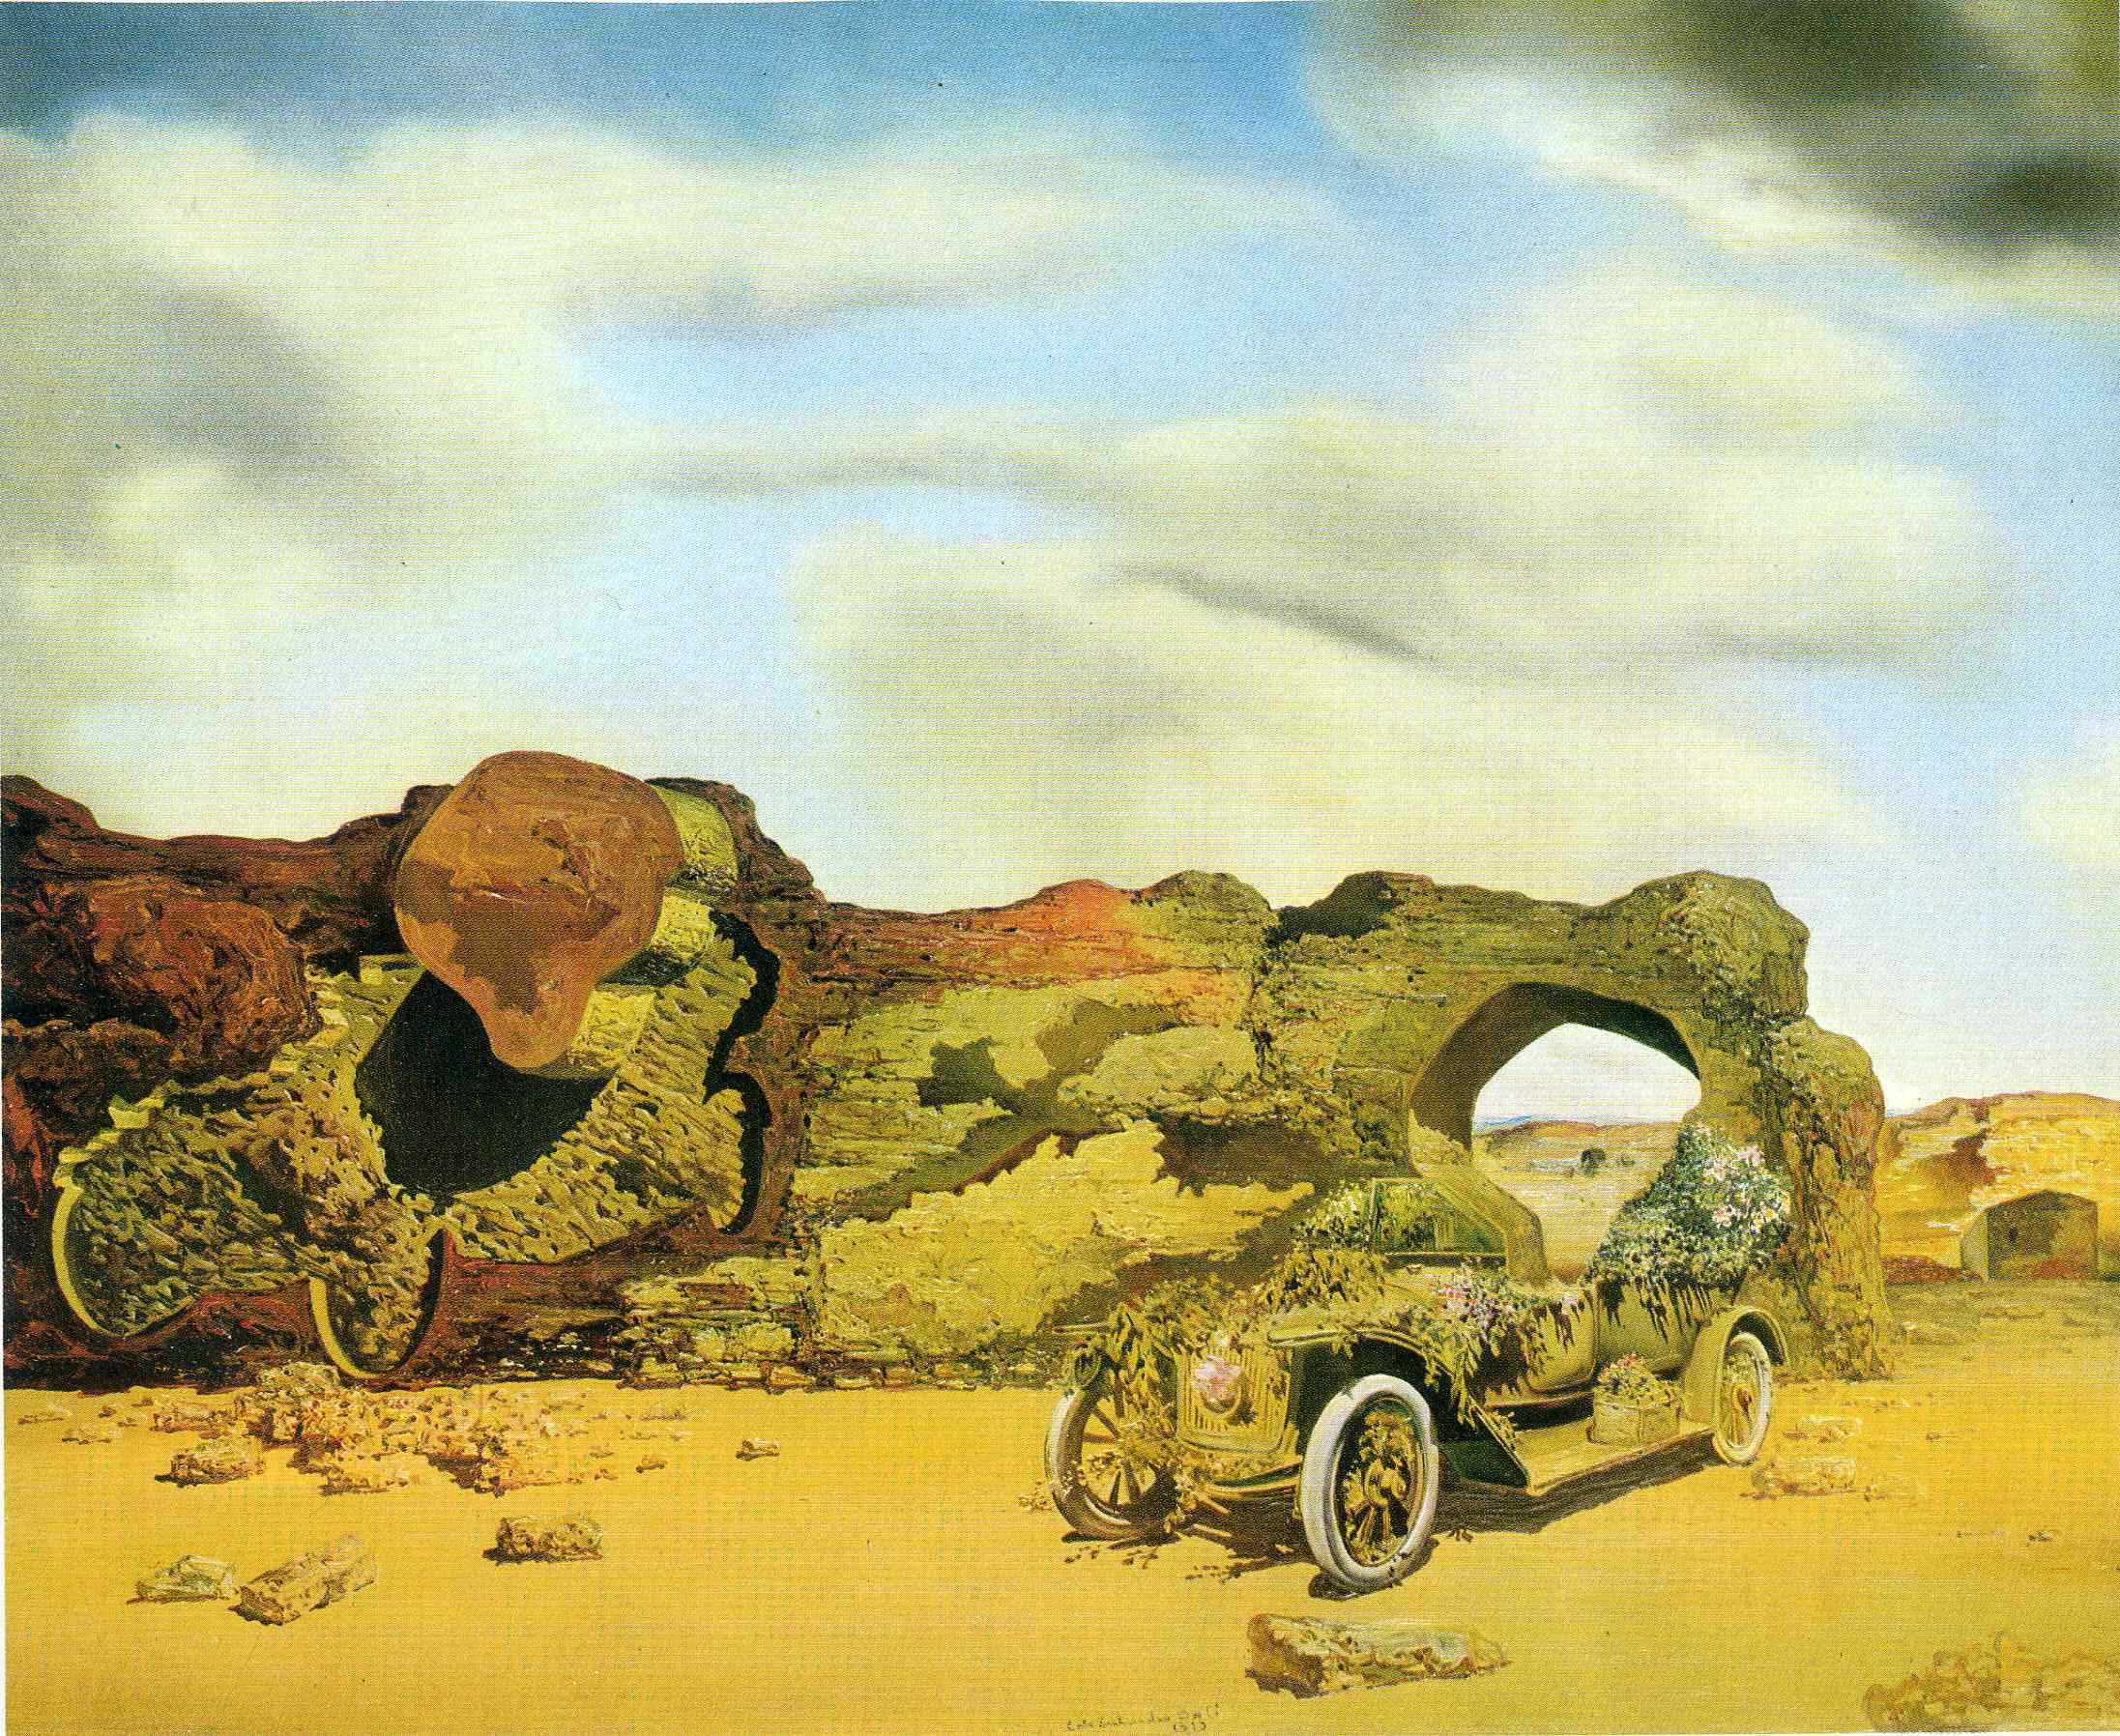 Desert Death [1935]